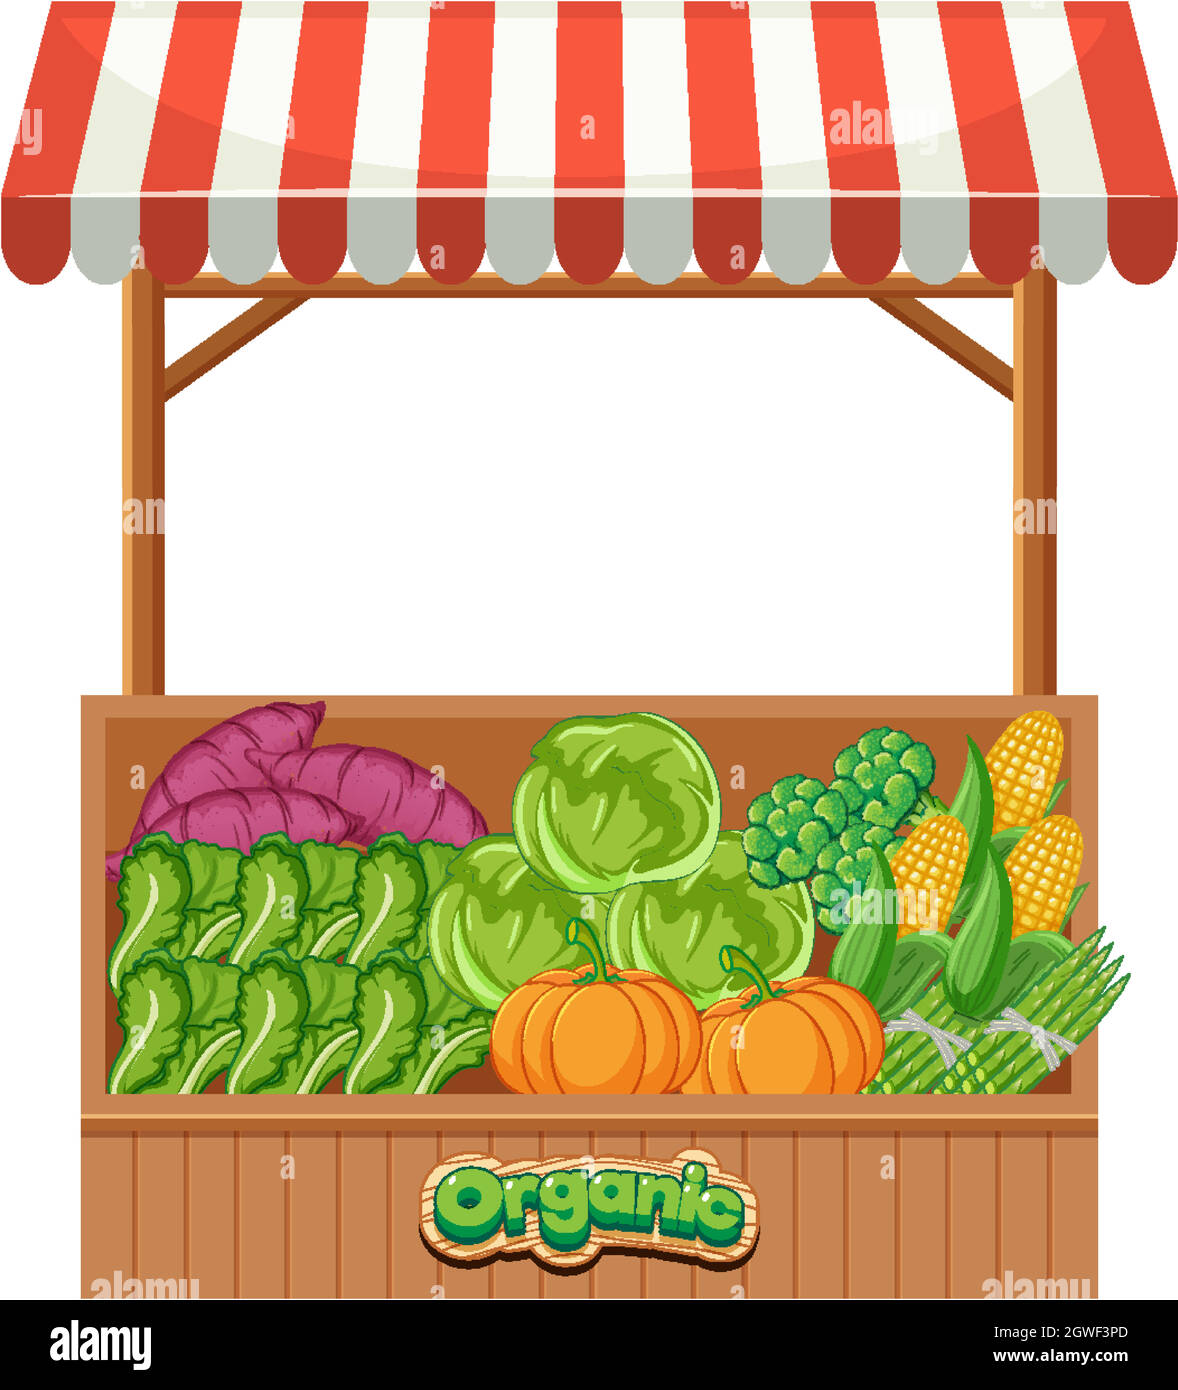 Vegetable vendor Stock Vector Images - Alamy